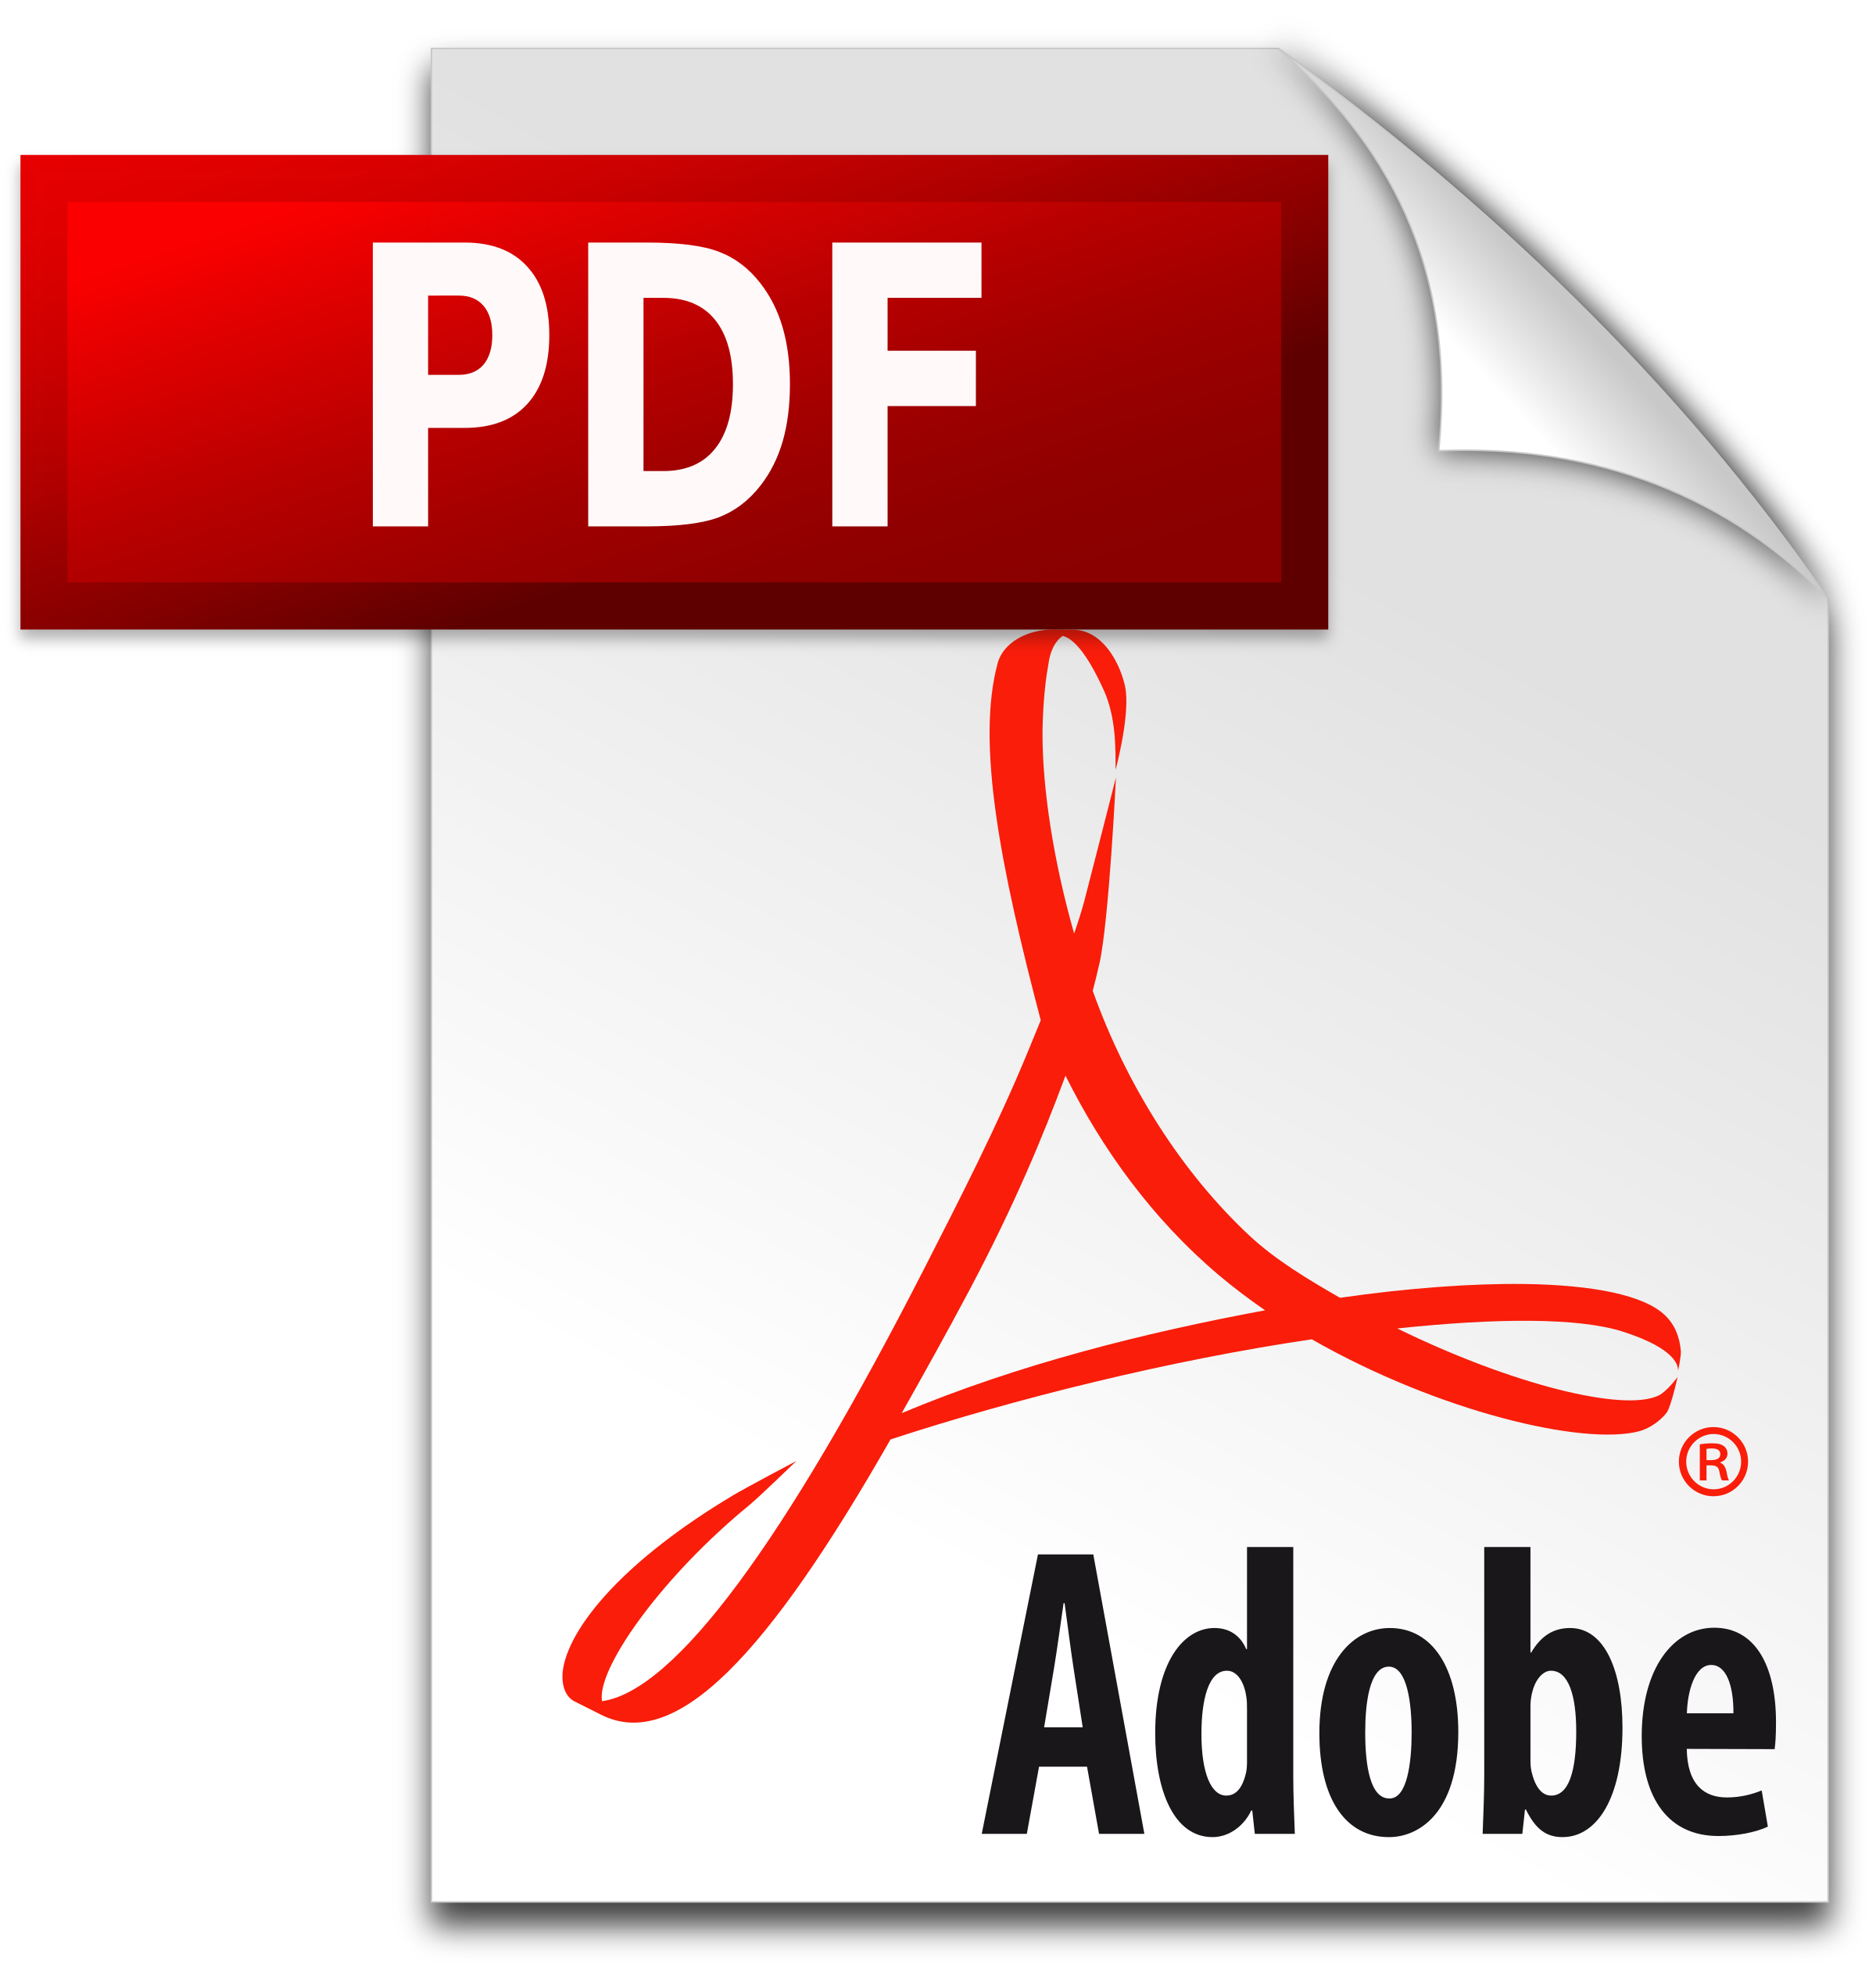 /cms/uploads/image/file/465503/adobe-pdf-icon-logo-png-transparent.png